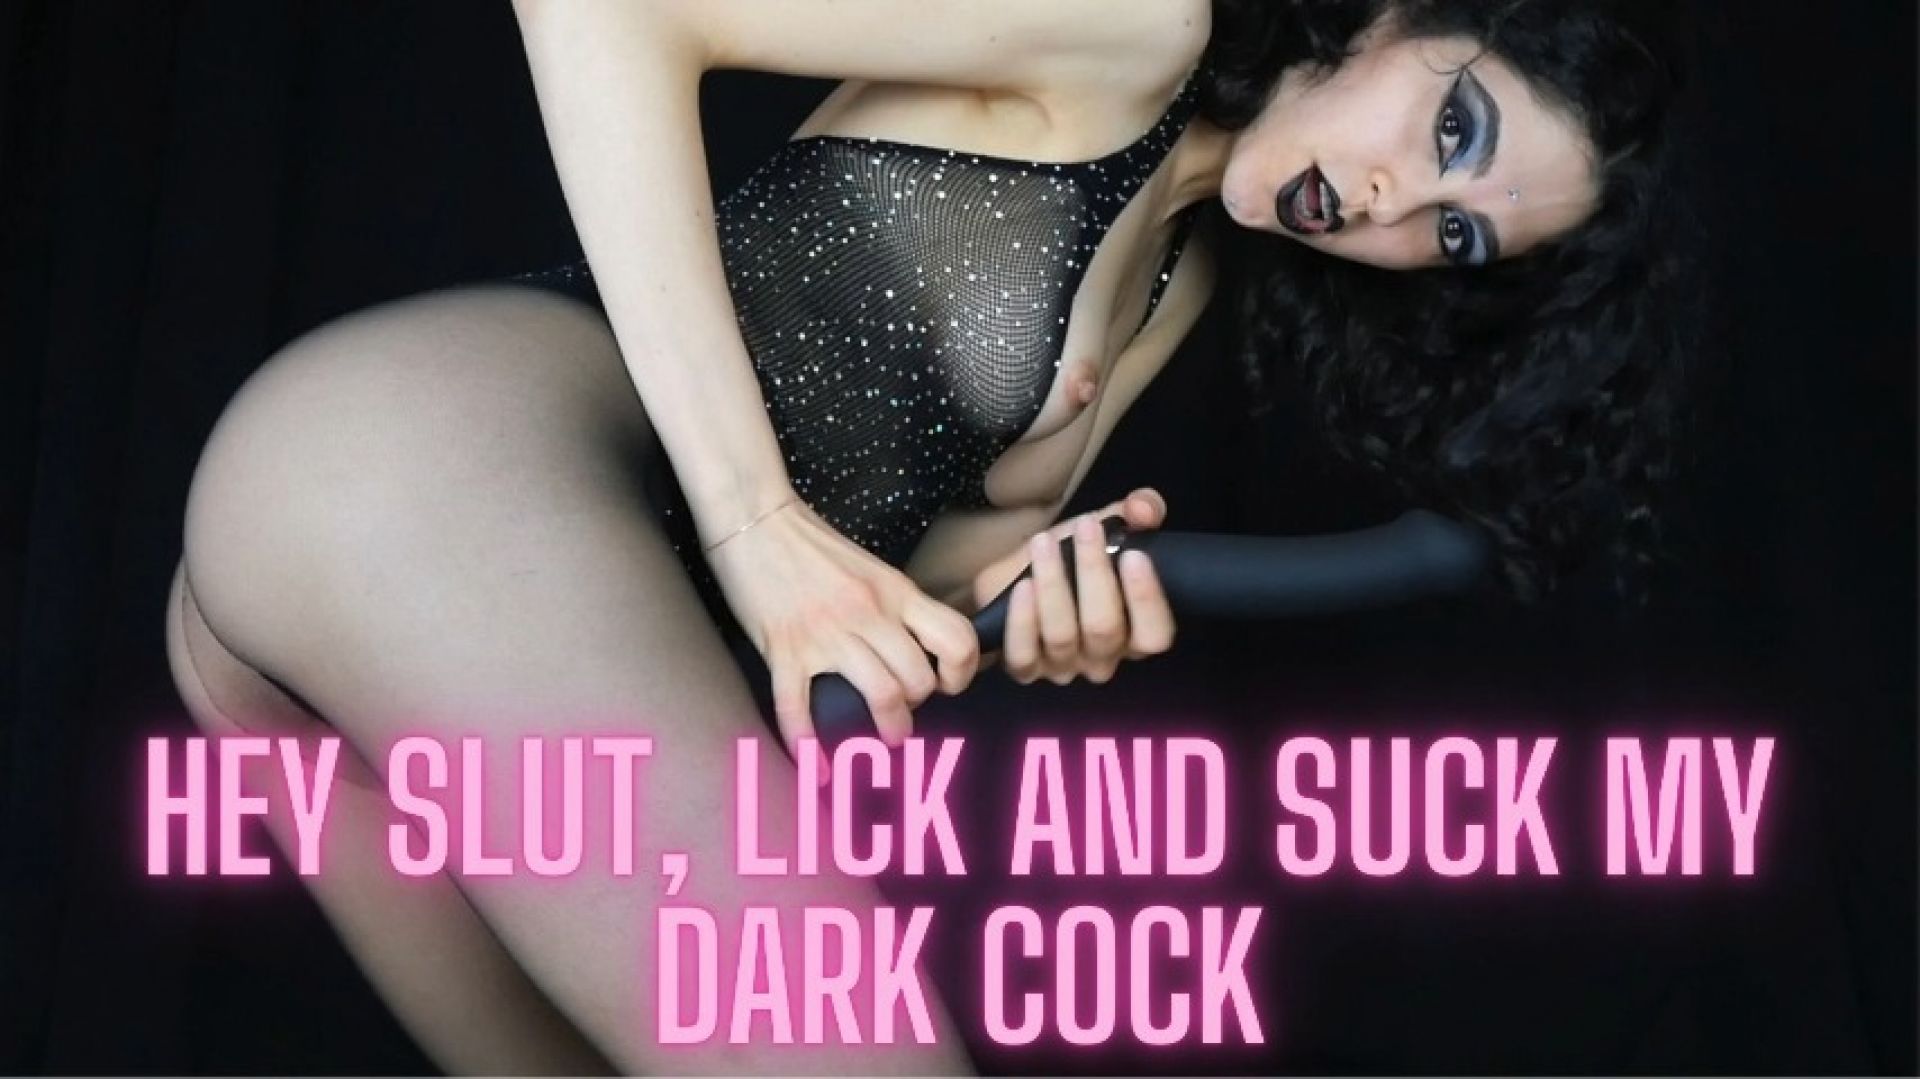 sweetlucifer1 - Hey slut! lick and suck my dark cock pic